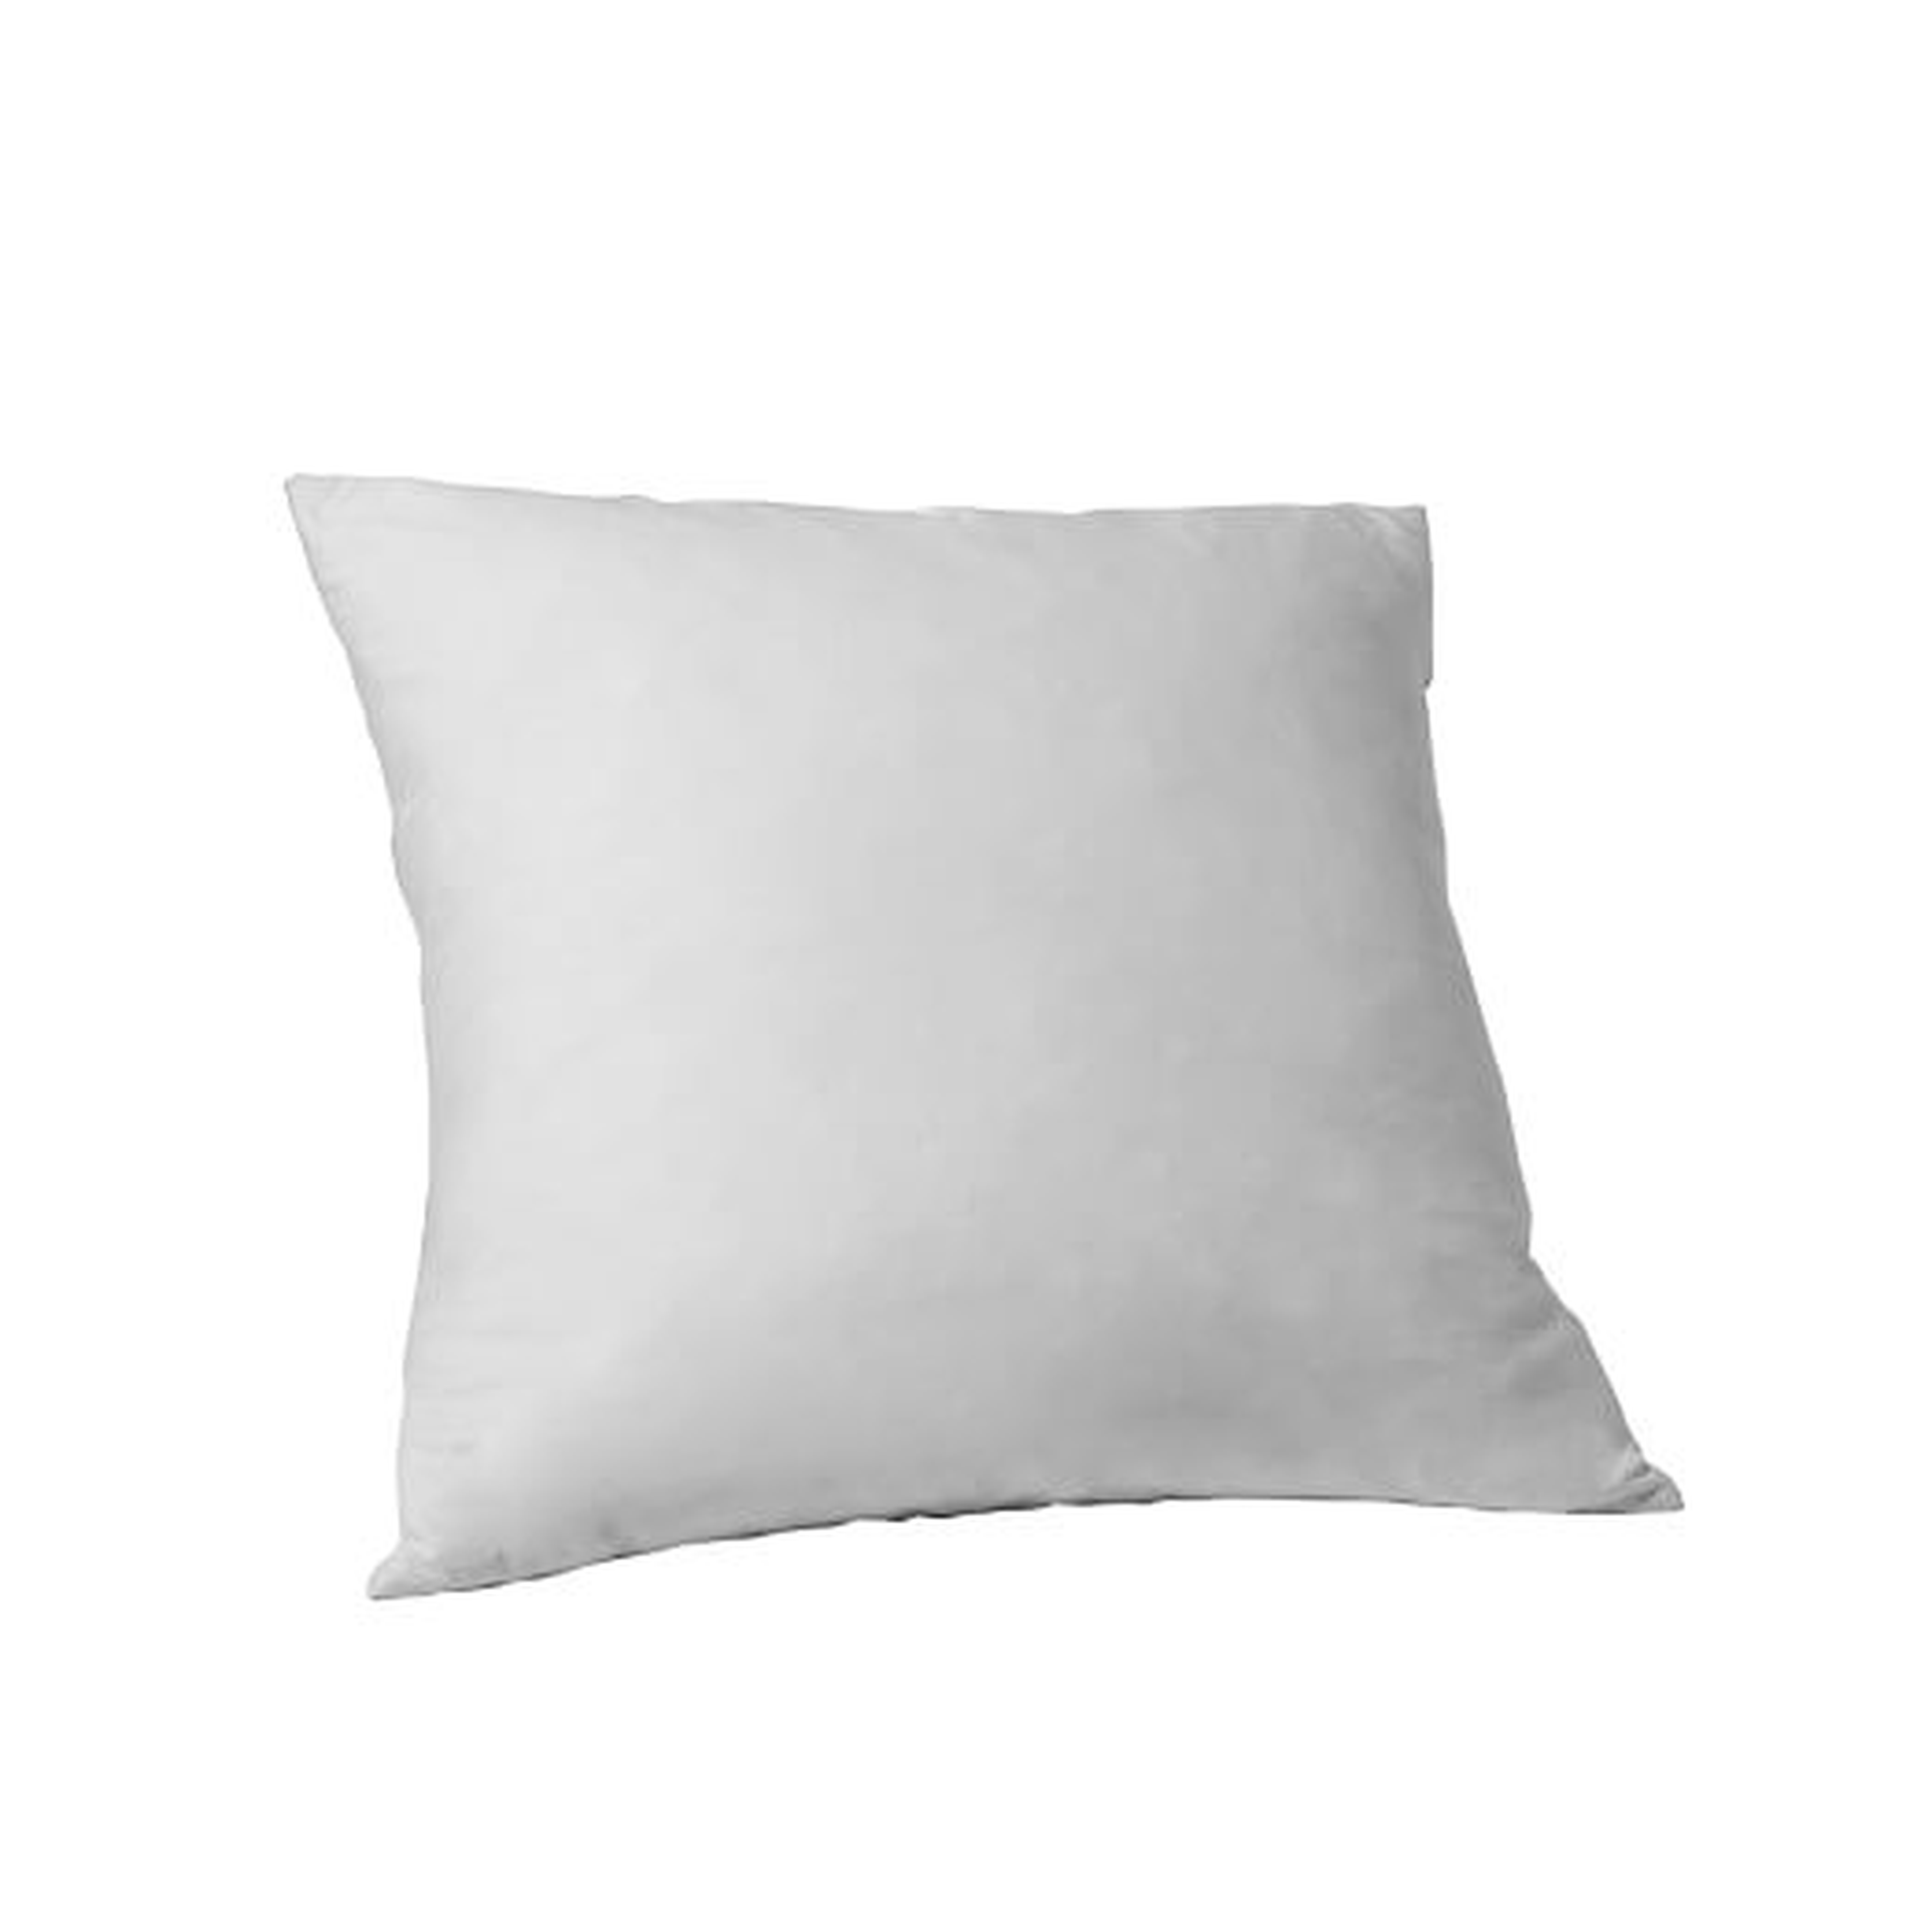 Decorative Pillow Insert – 20"sq. Poly Fiber - West Elm